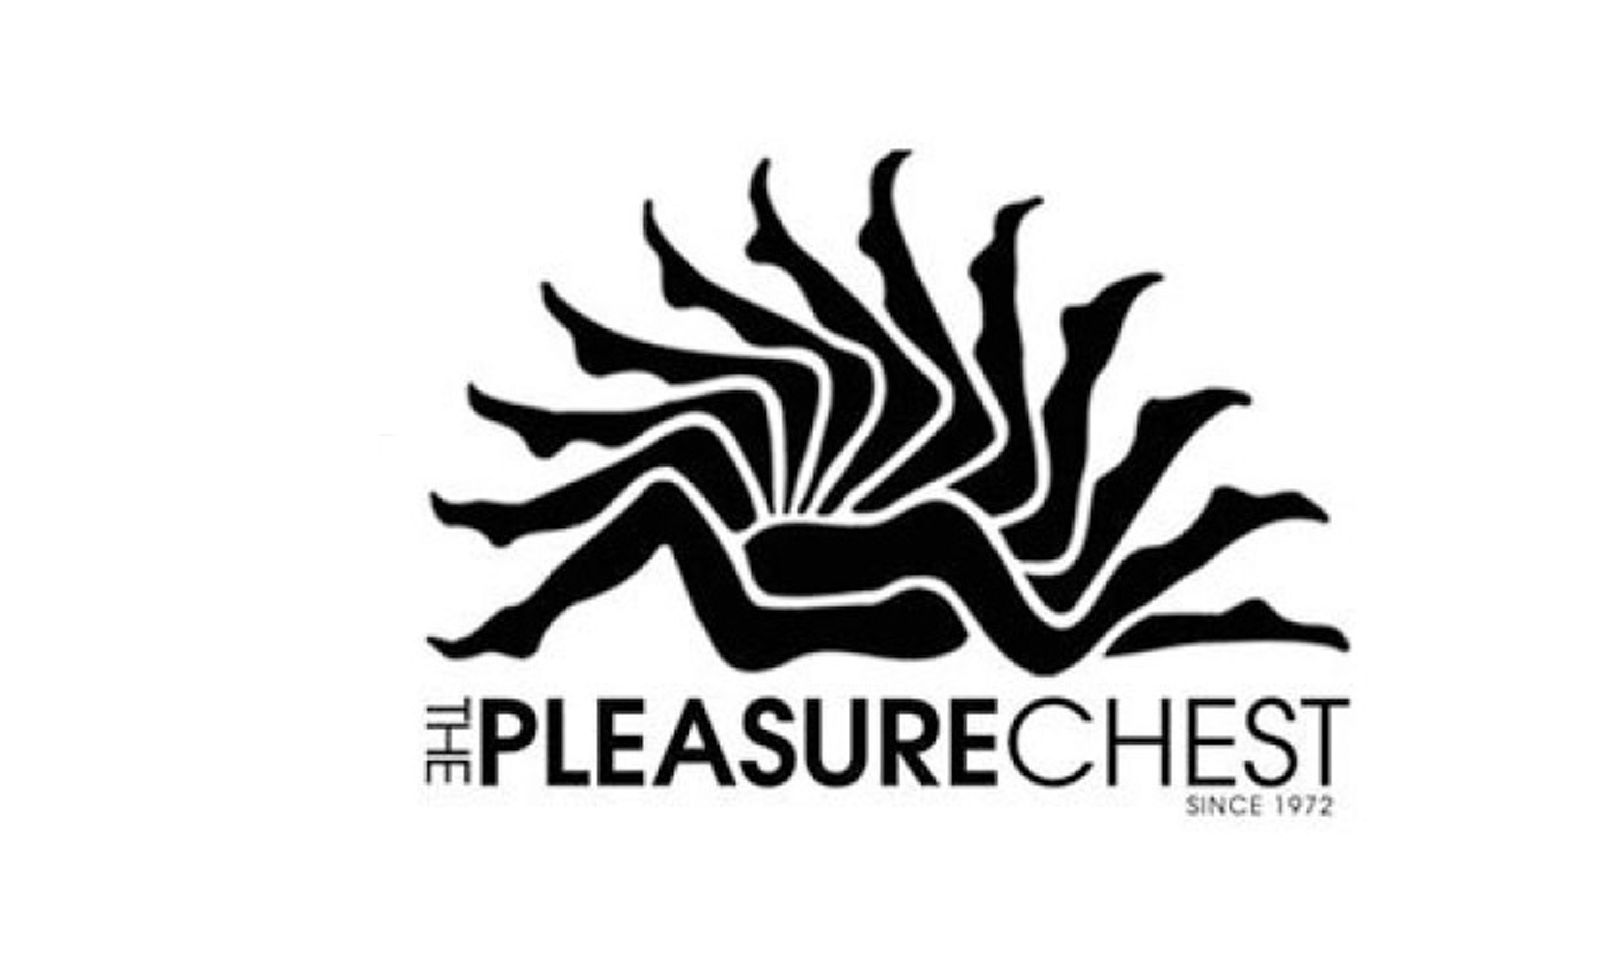 Pleasure Chest Presenting Free PleasurEd Workshops During Holidays